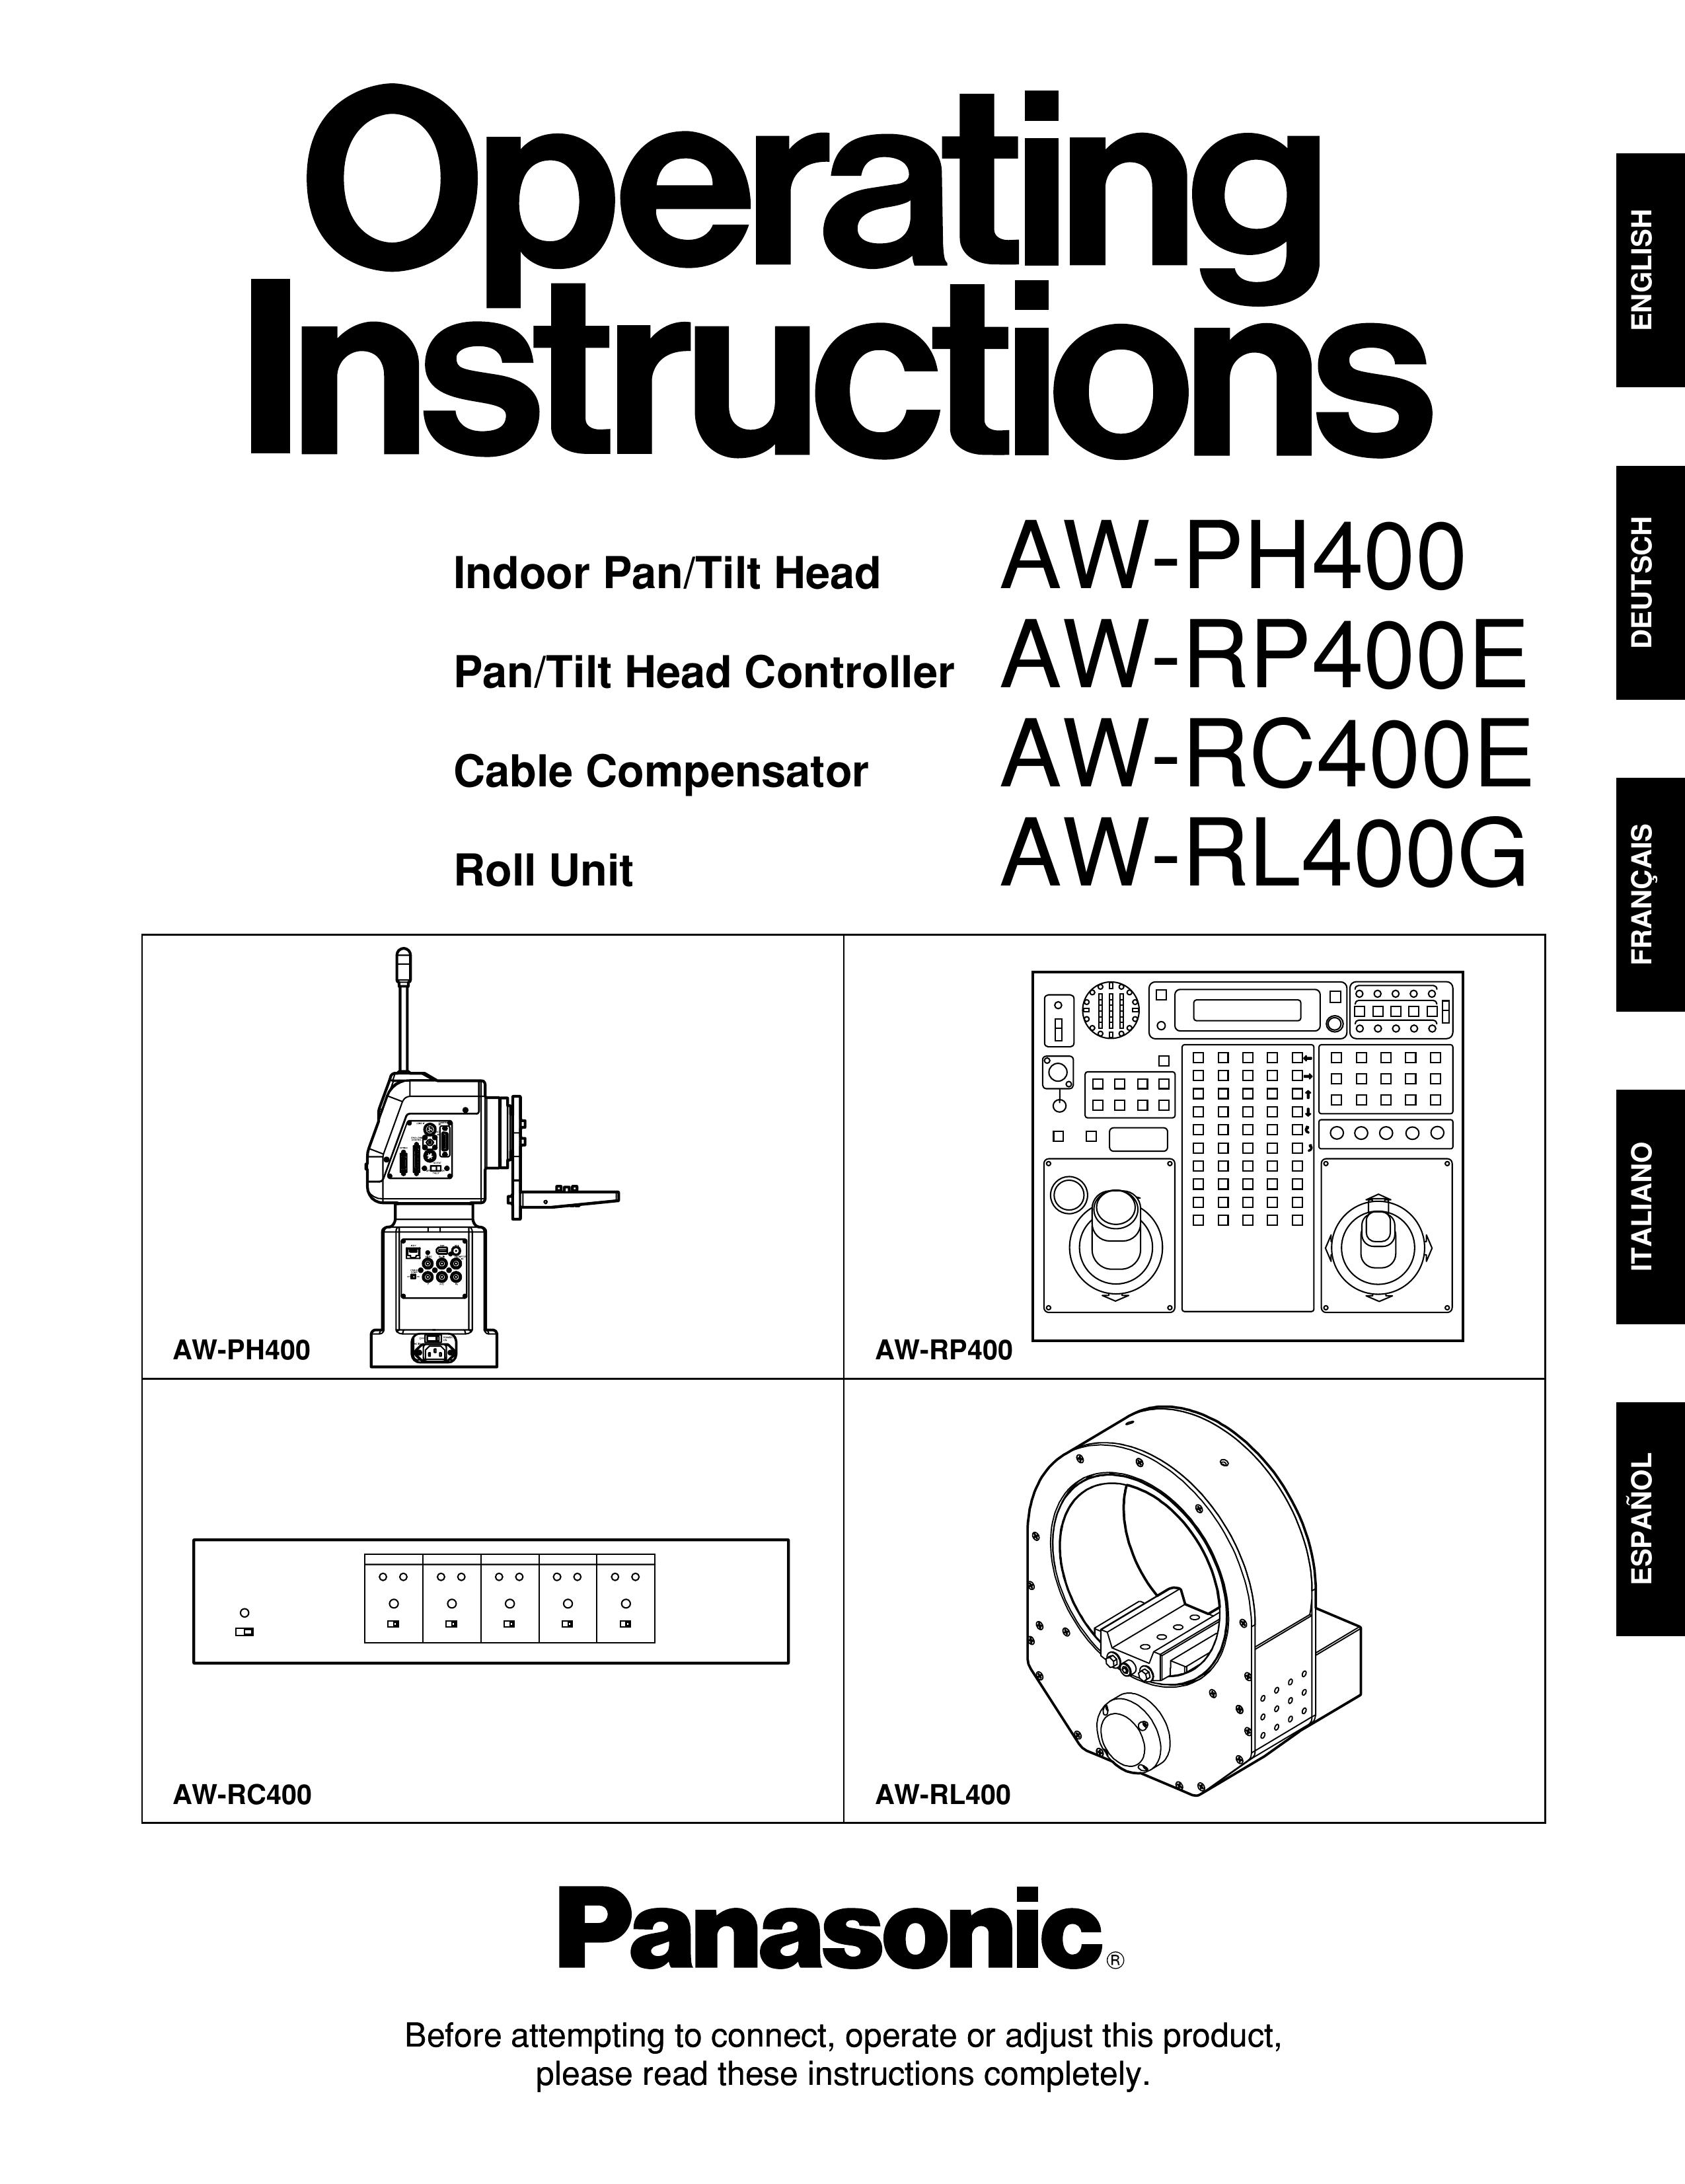 Panasonic AW-RP400E Digital Camera User Manual